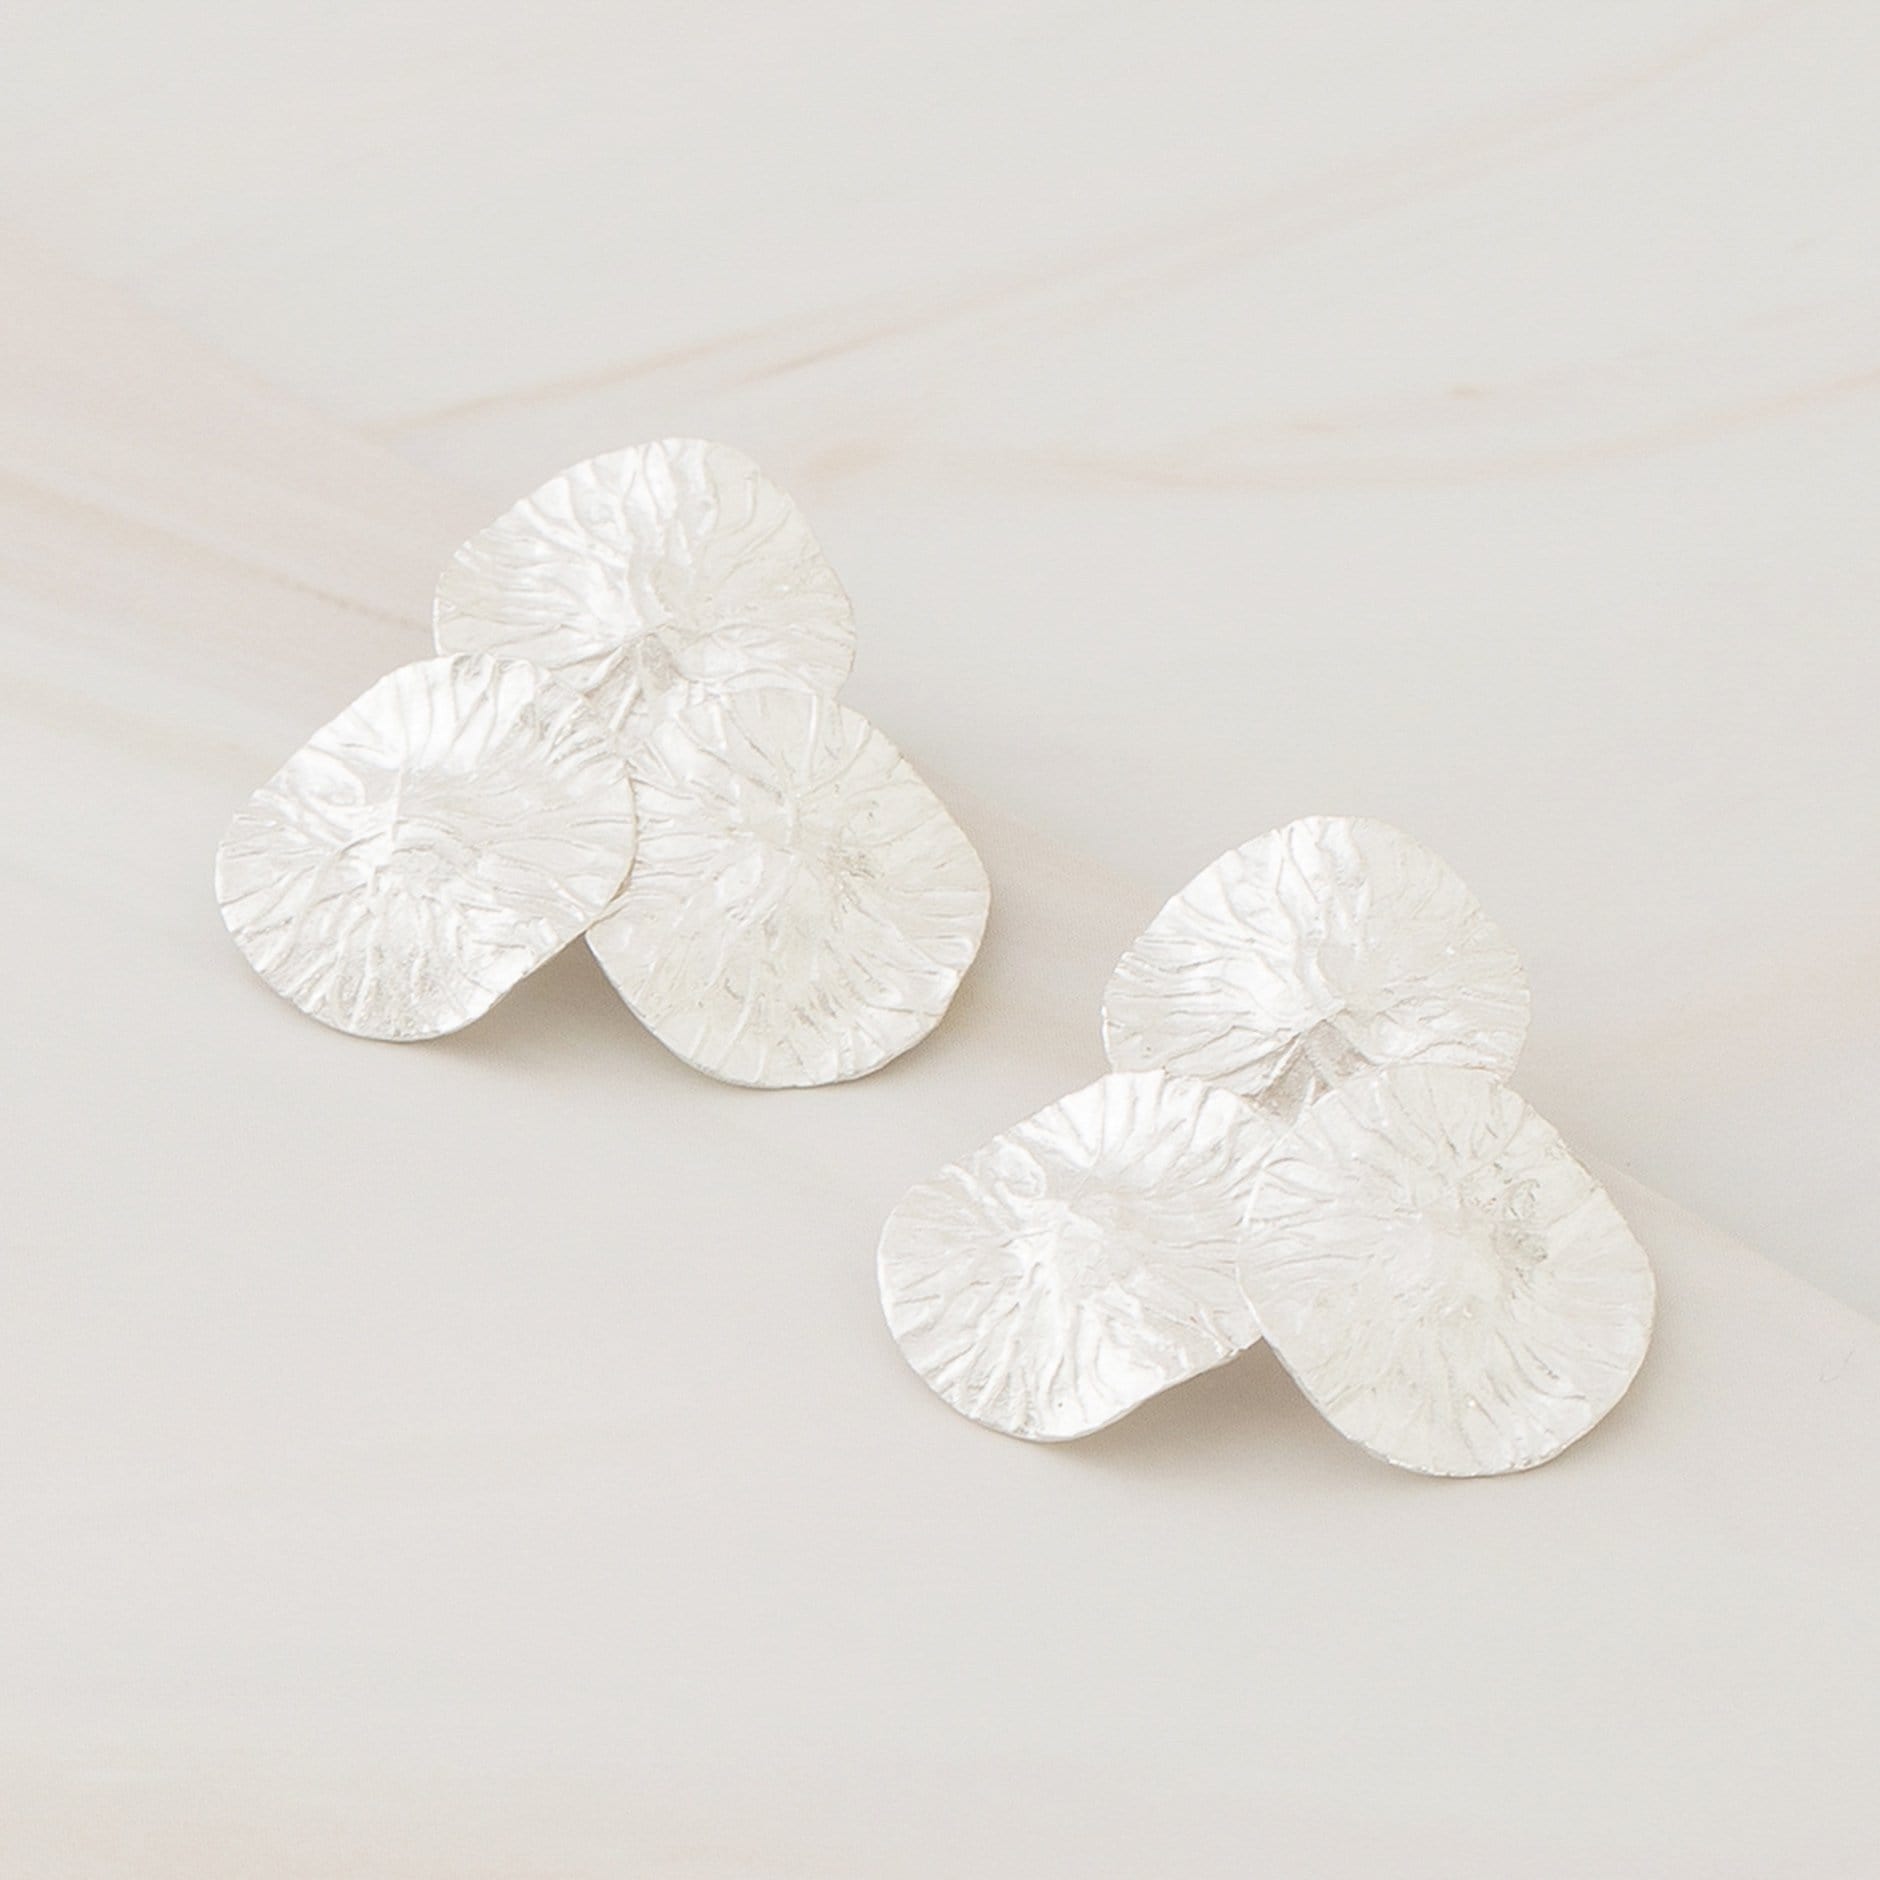 Emblem Jewelry Earrings Silver Tone Dancing Lily Pad Statement Earrings